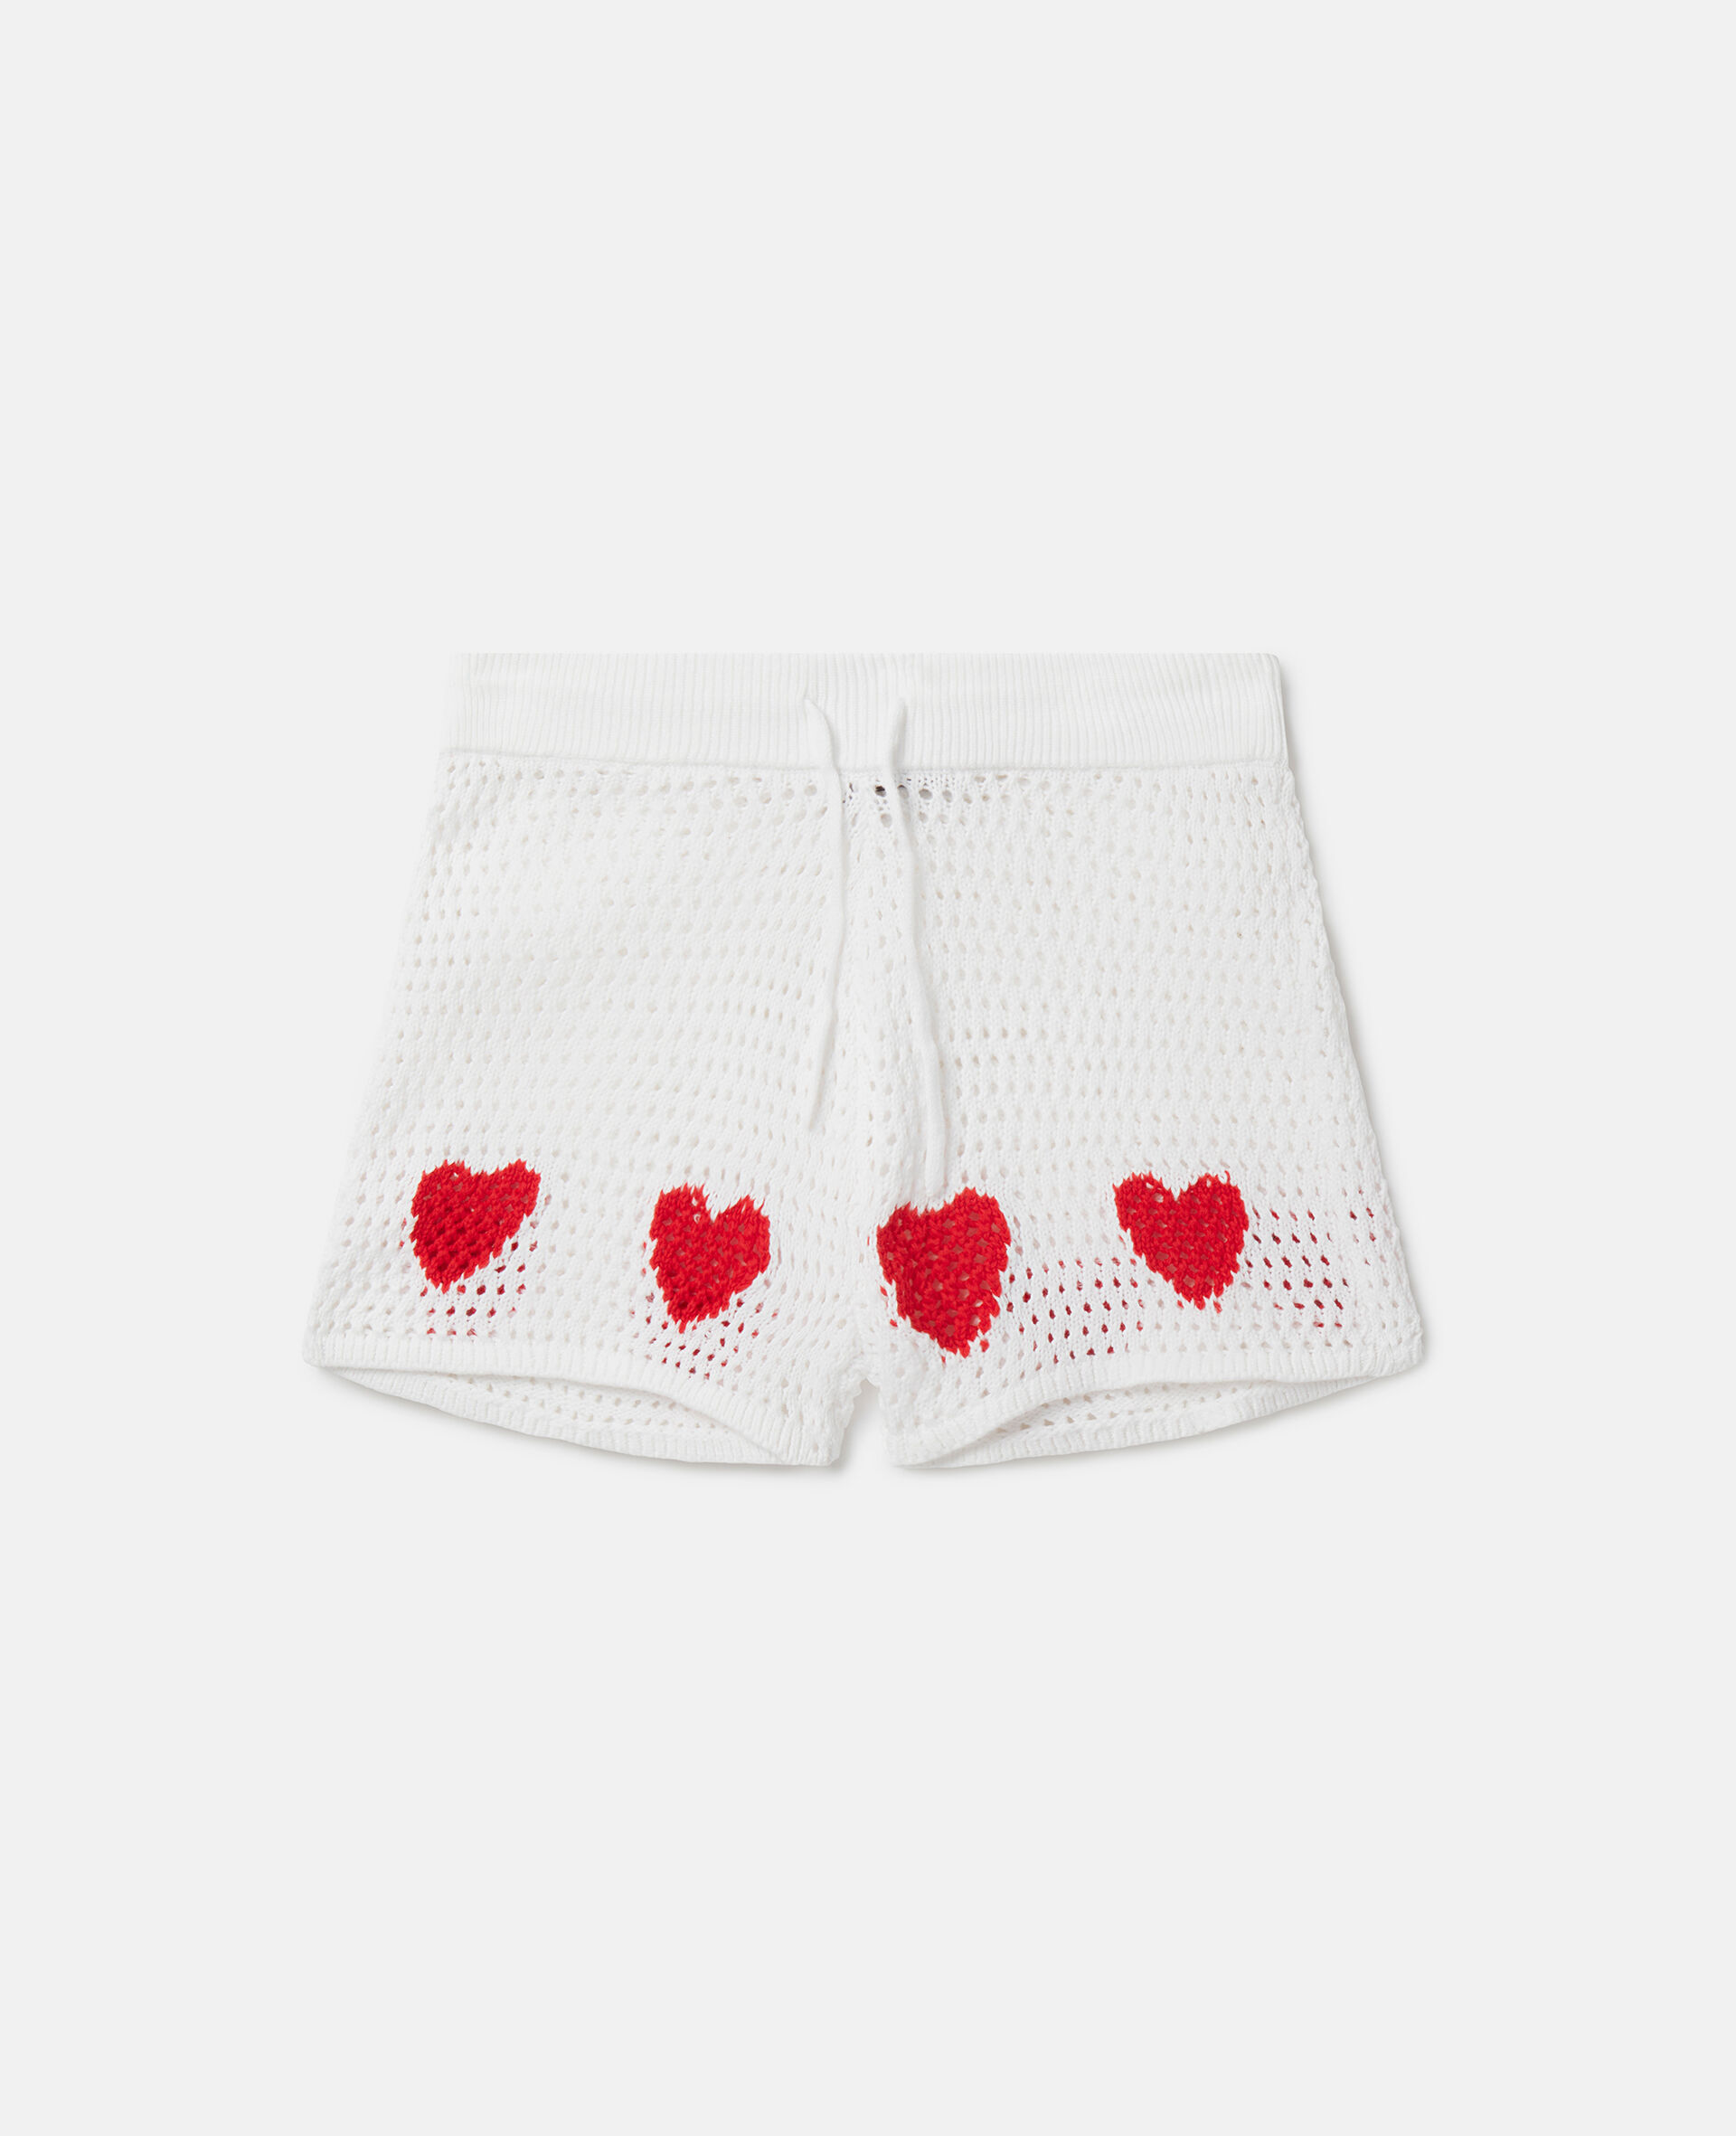 Heart Crocheted Shorts-White-medium